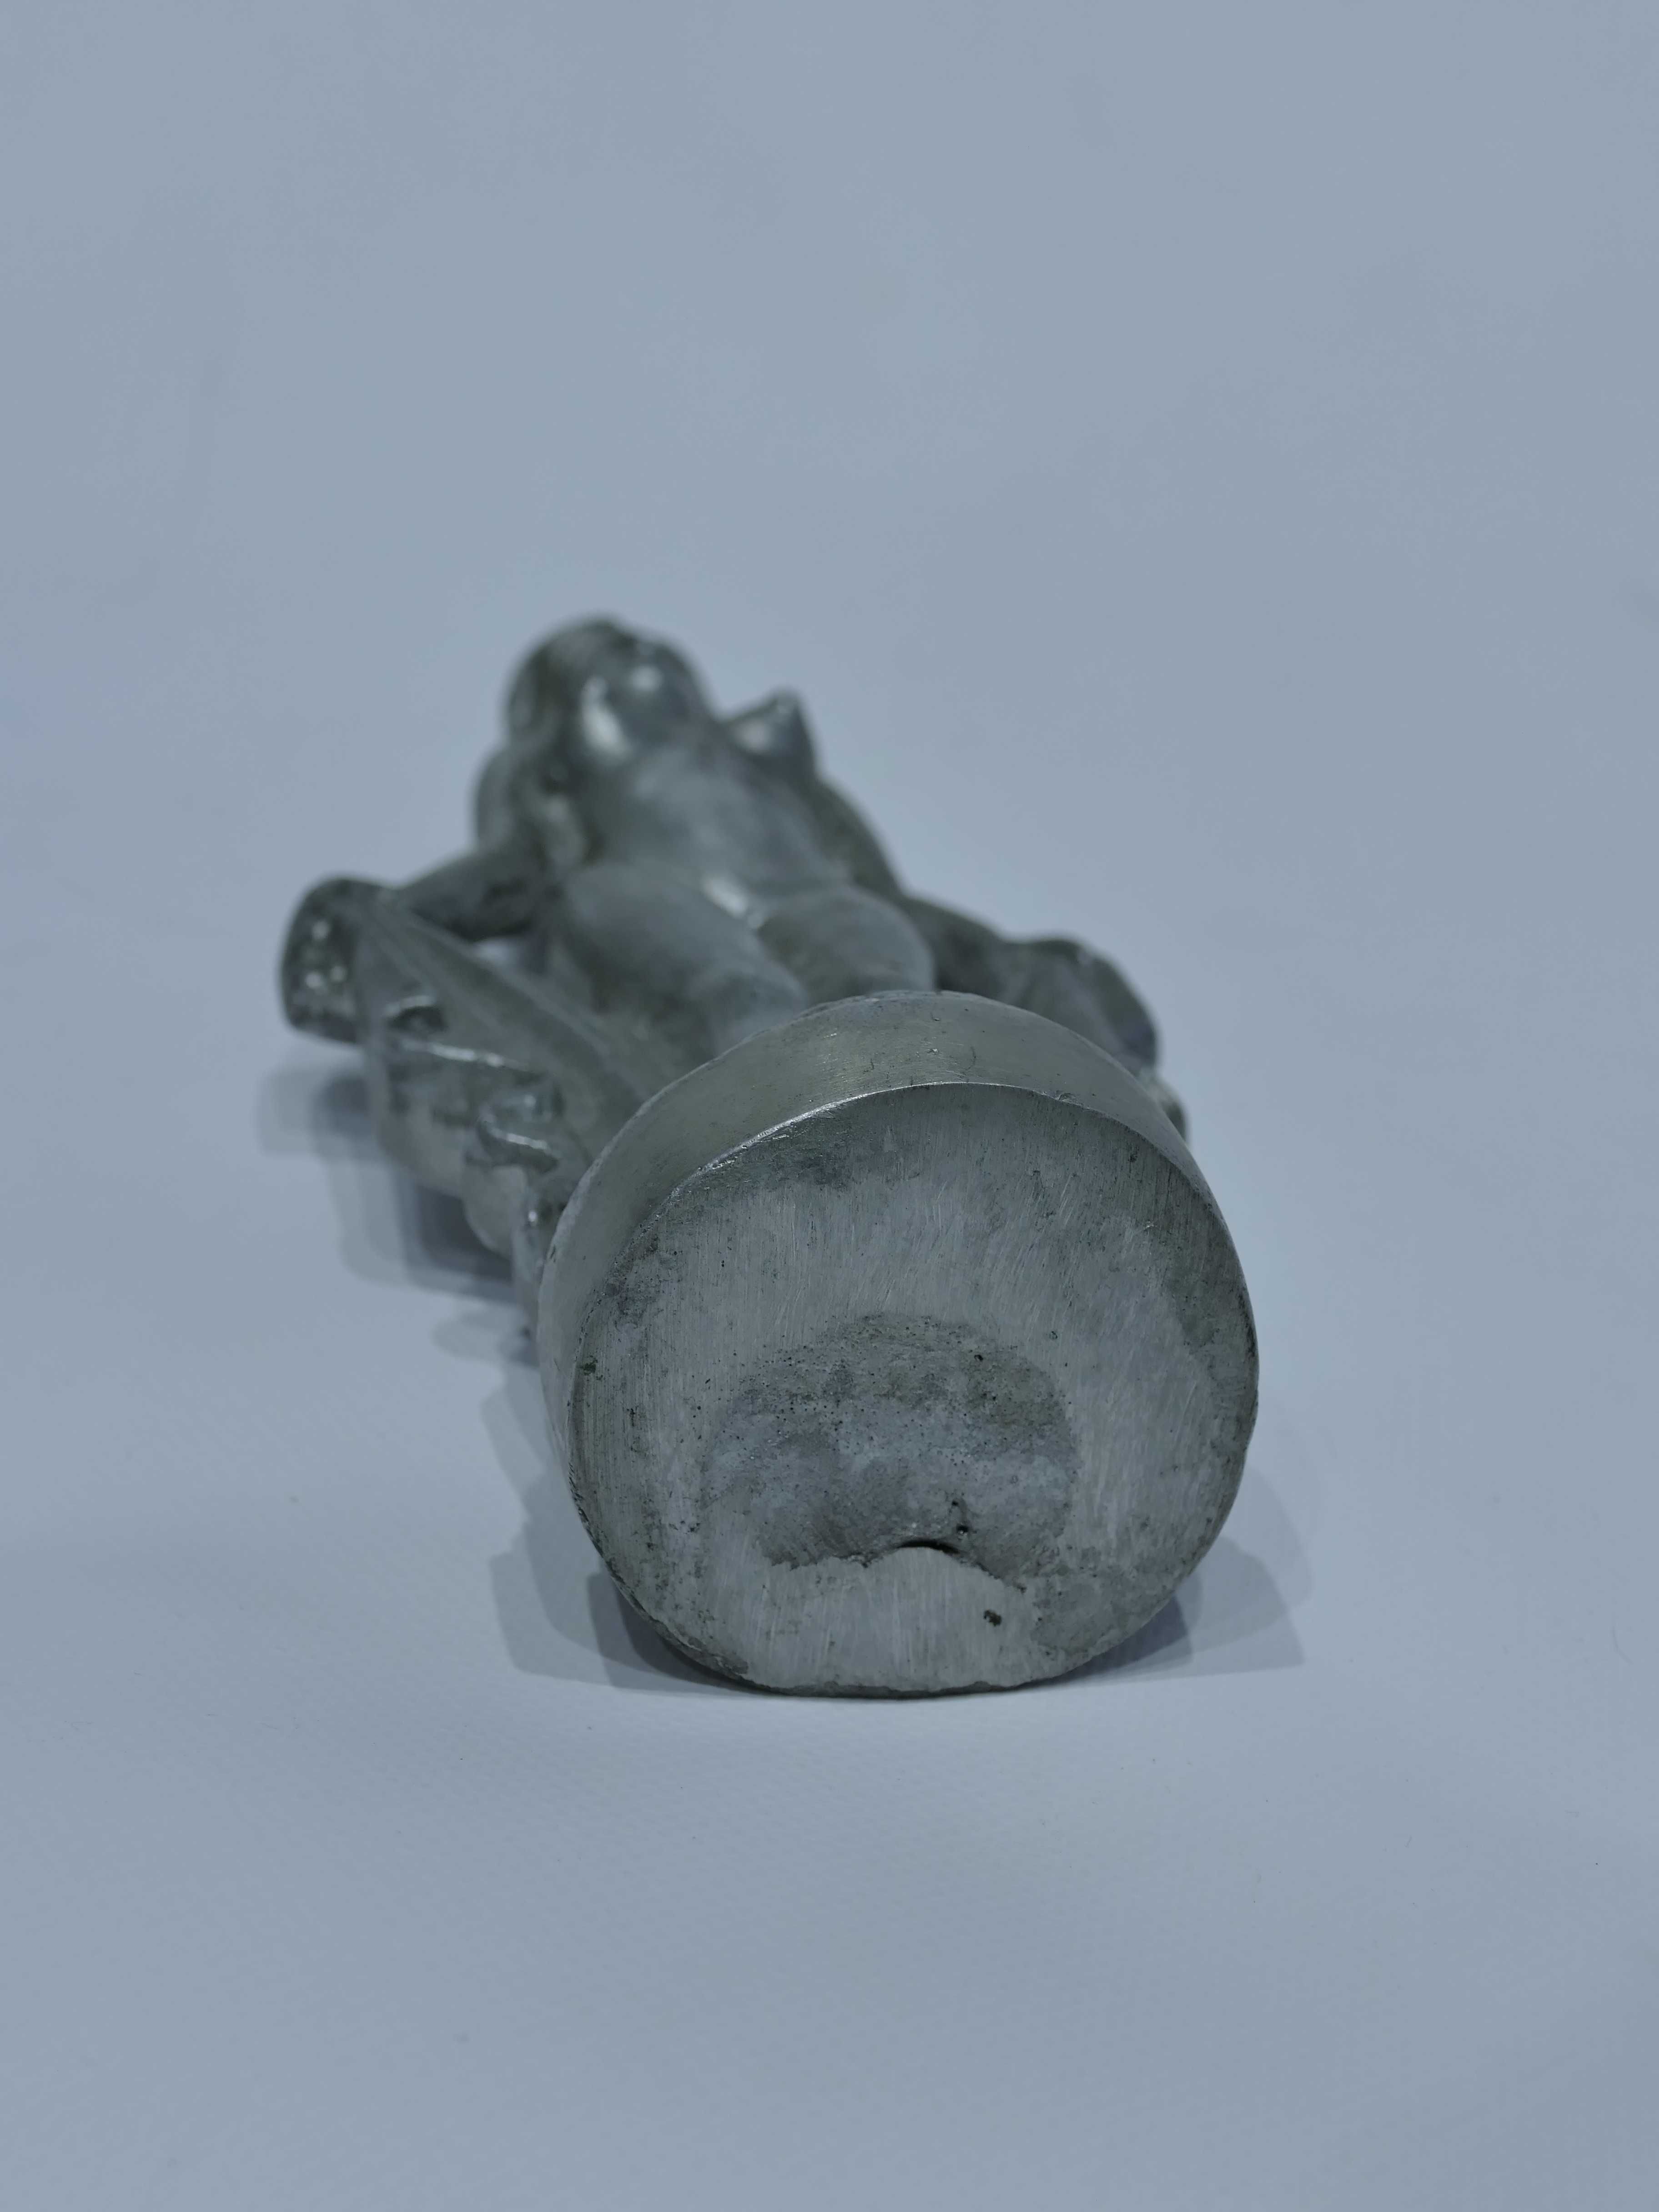 Stara aluminiowa metalowa figurka PRL Wenus / Afrodyta kobieta Retro